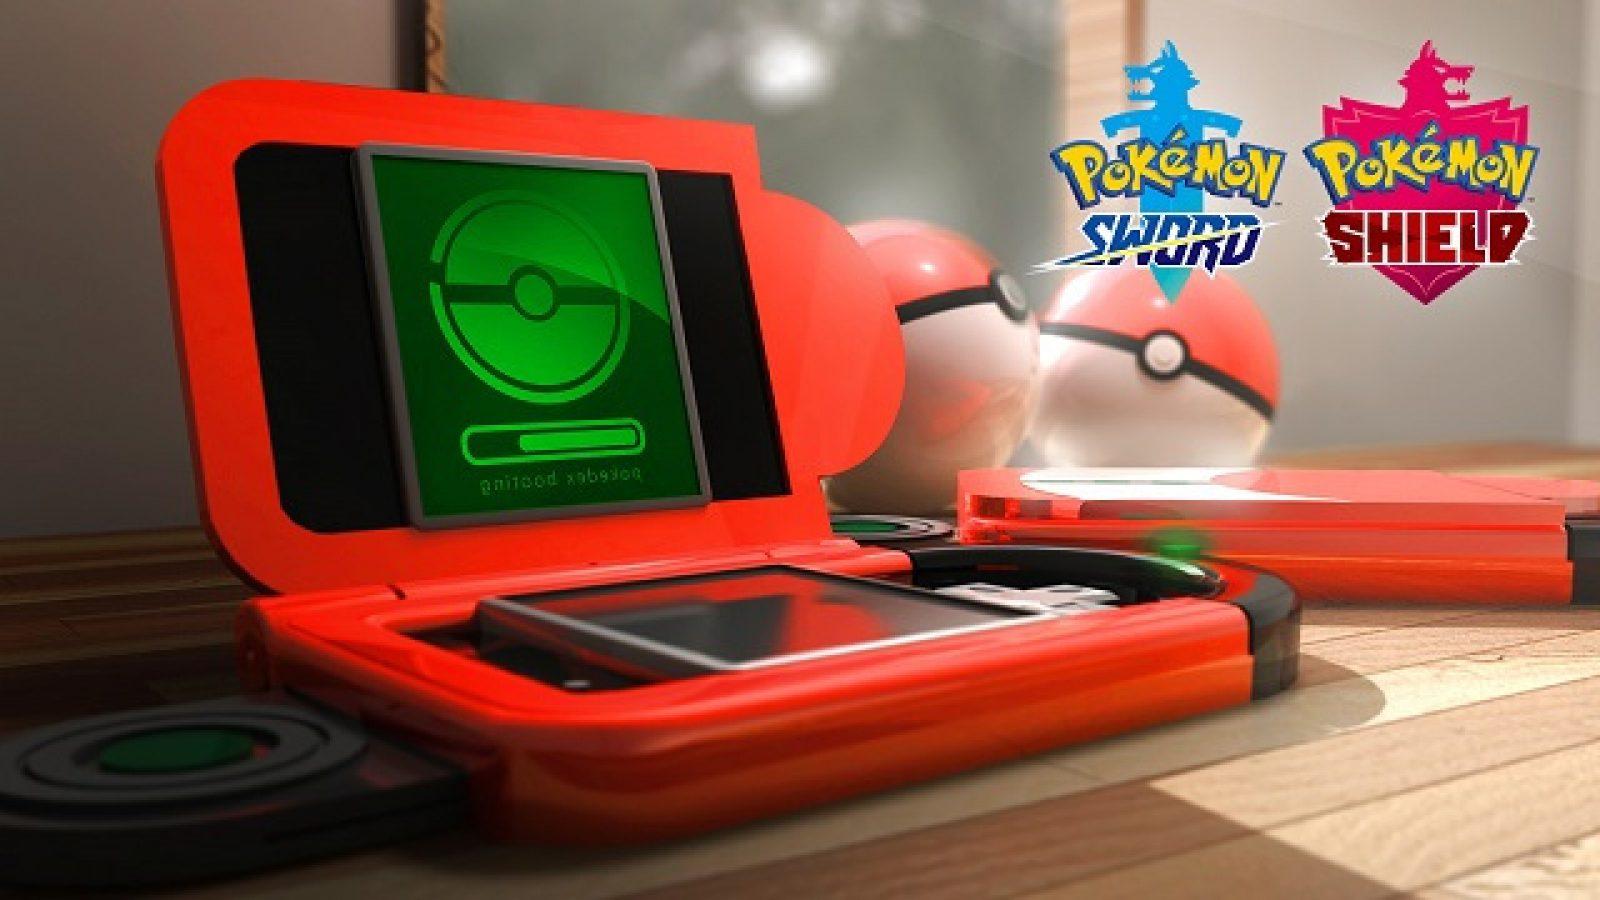 Pokémon Sword and Shield's Pokedex has leaked - Sugar Gamers